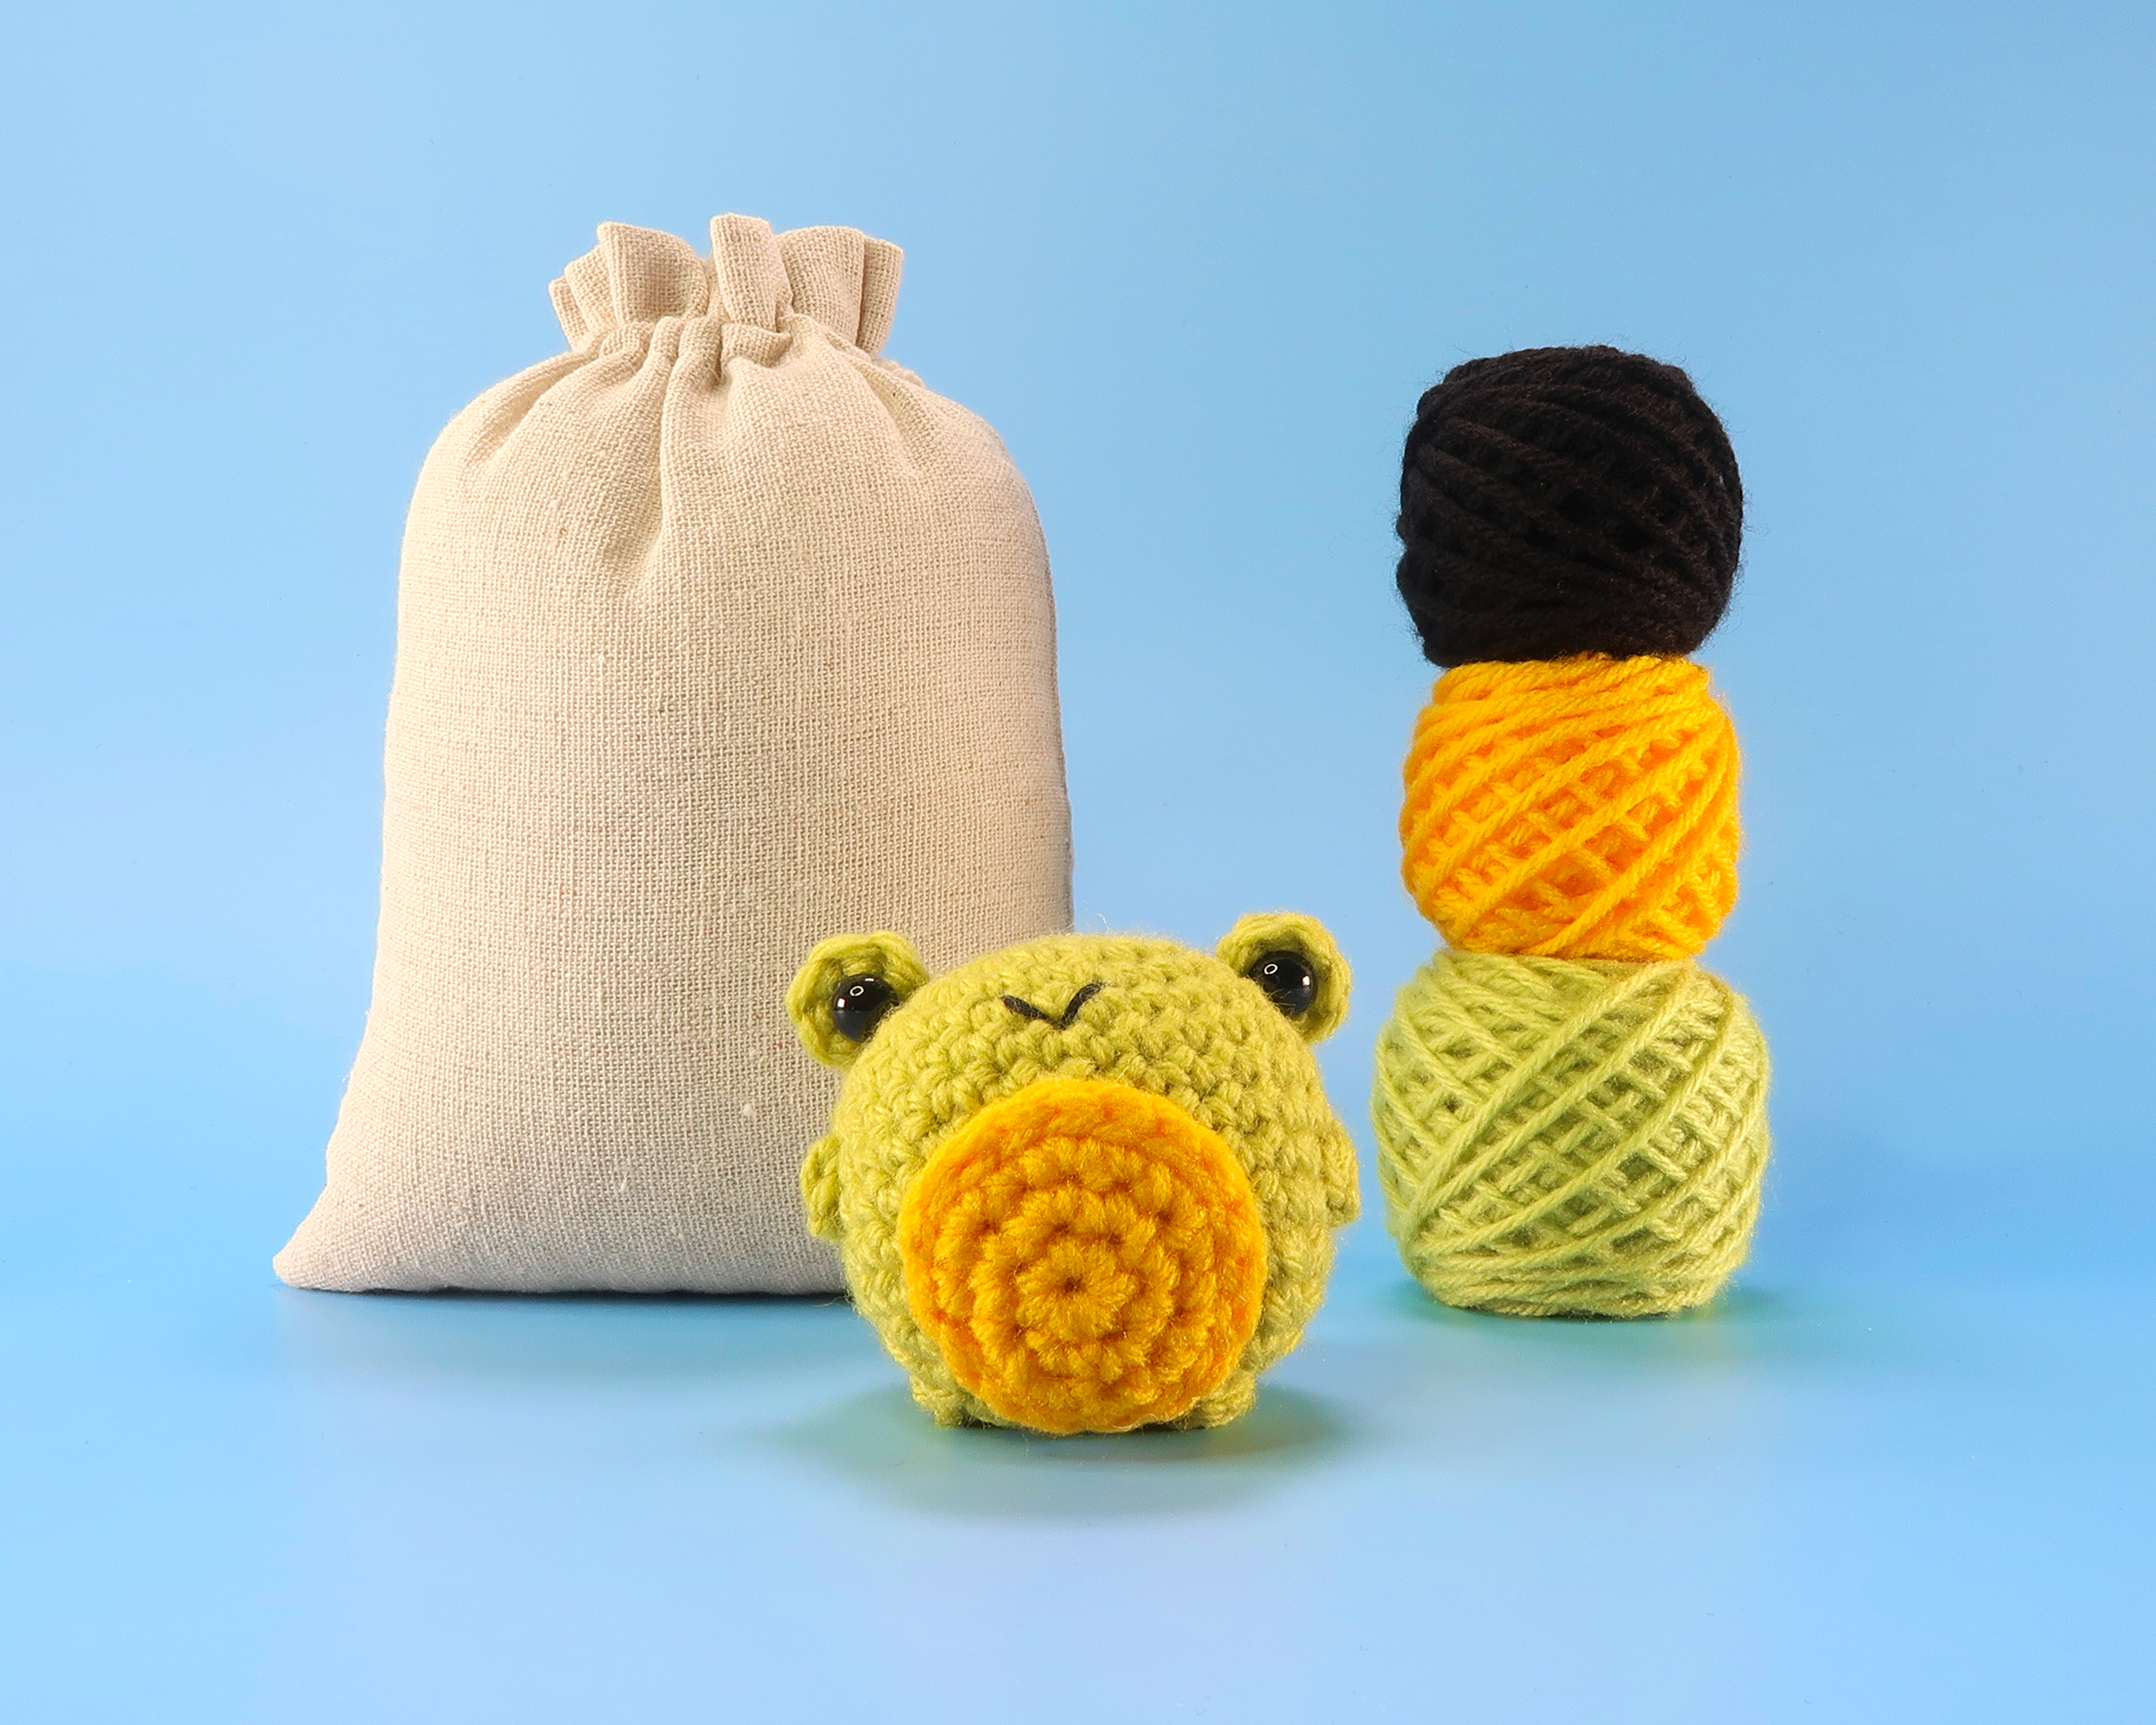 HapKid Crochet Kit for Beginners, 3 Pattern Animals - Rabbit, Pig, Frog,  Beginner Crochet Starter Kit with Step-by-Step Video Tutorials, Learn to